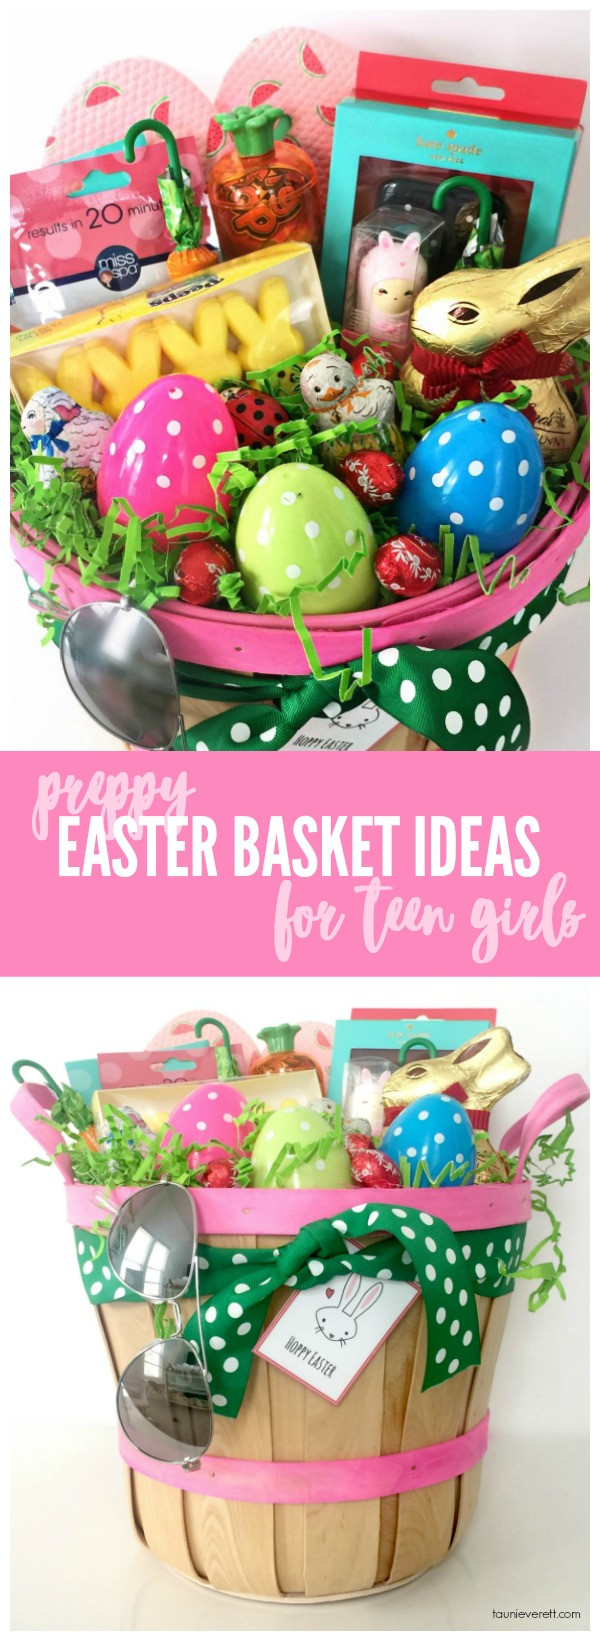 Teen Easter Basket Ideas
 Preppy Easter Basket Ideas for Teen Girls